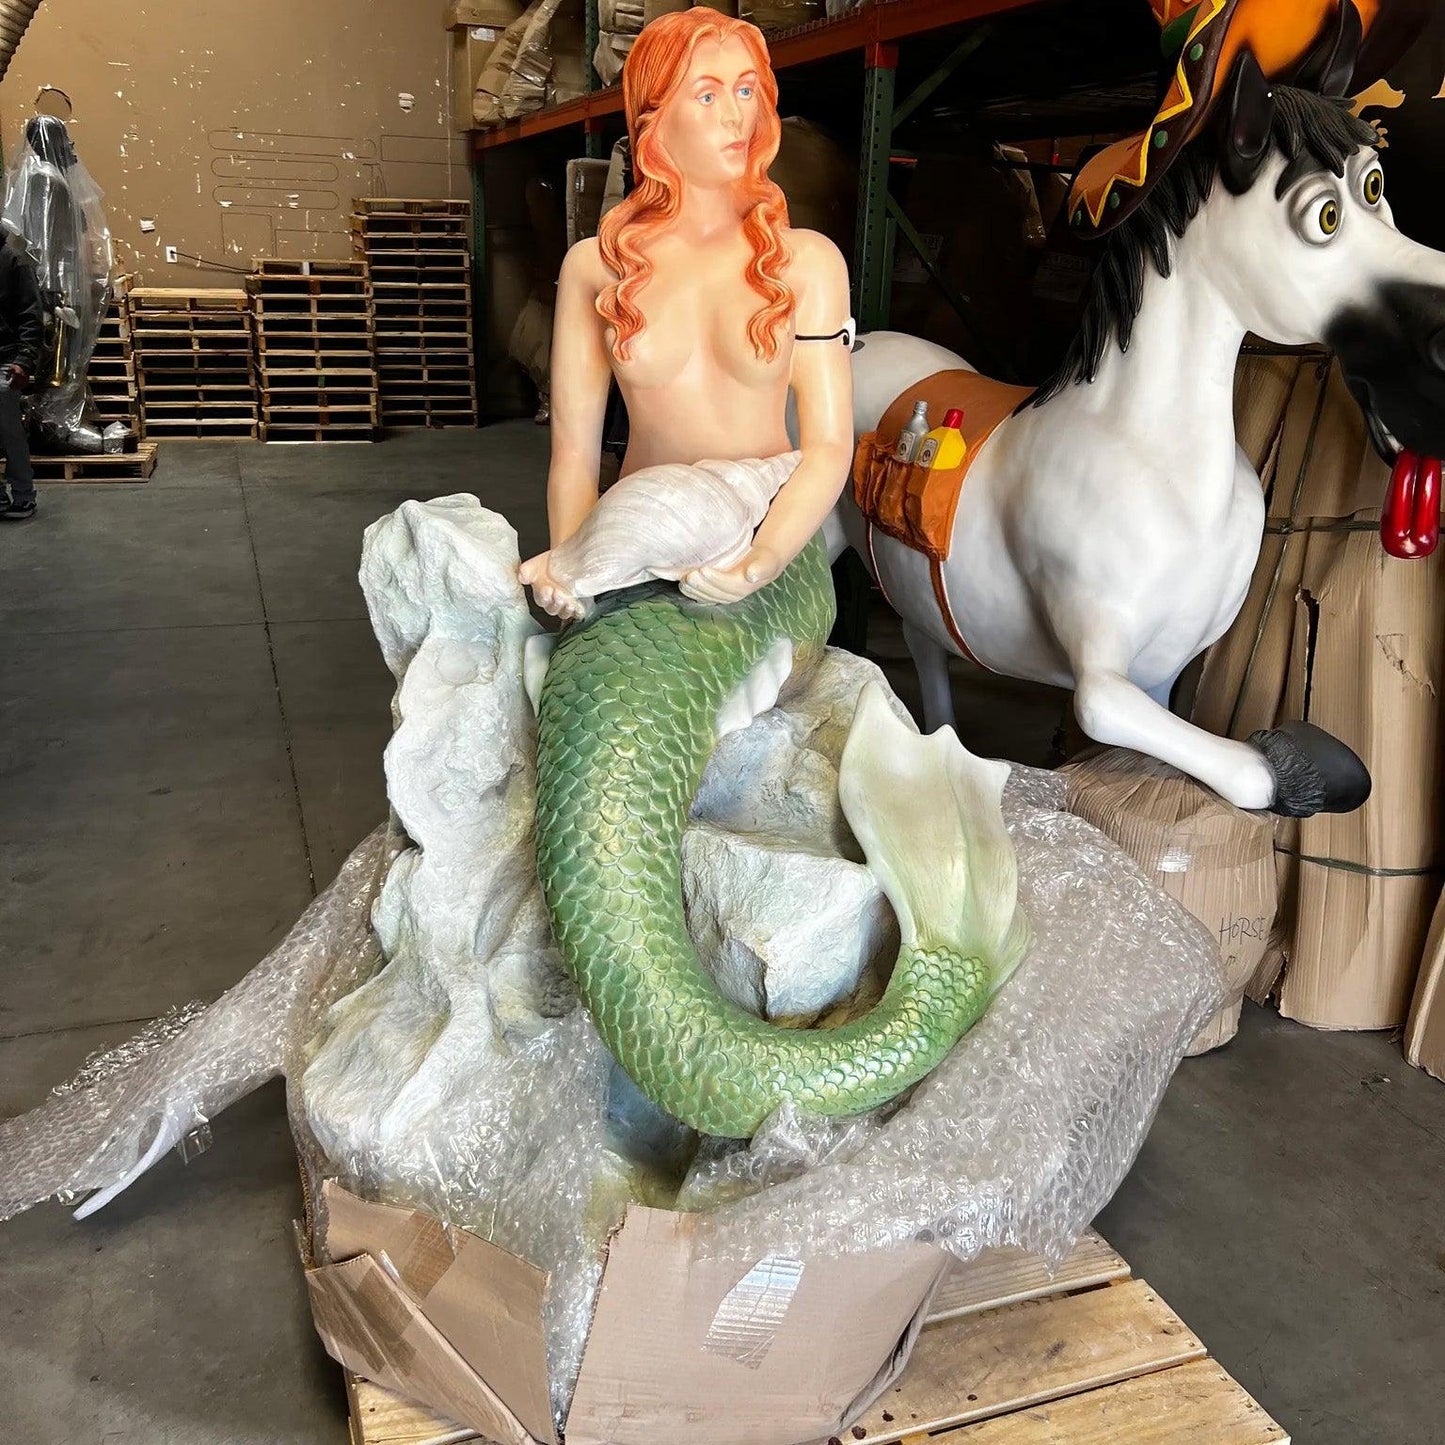 Mermaid Sitting On Rock Statue